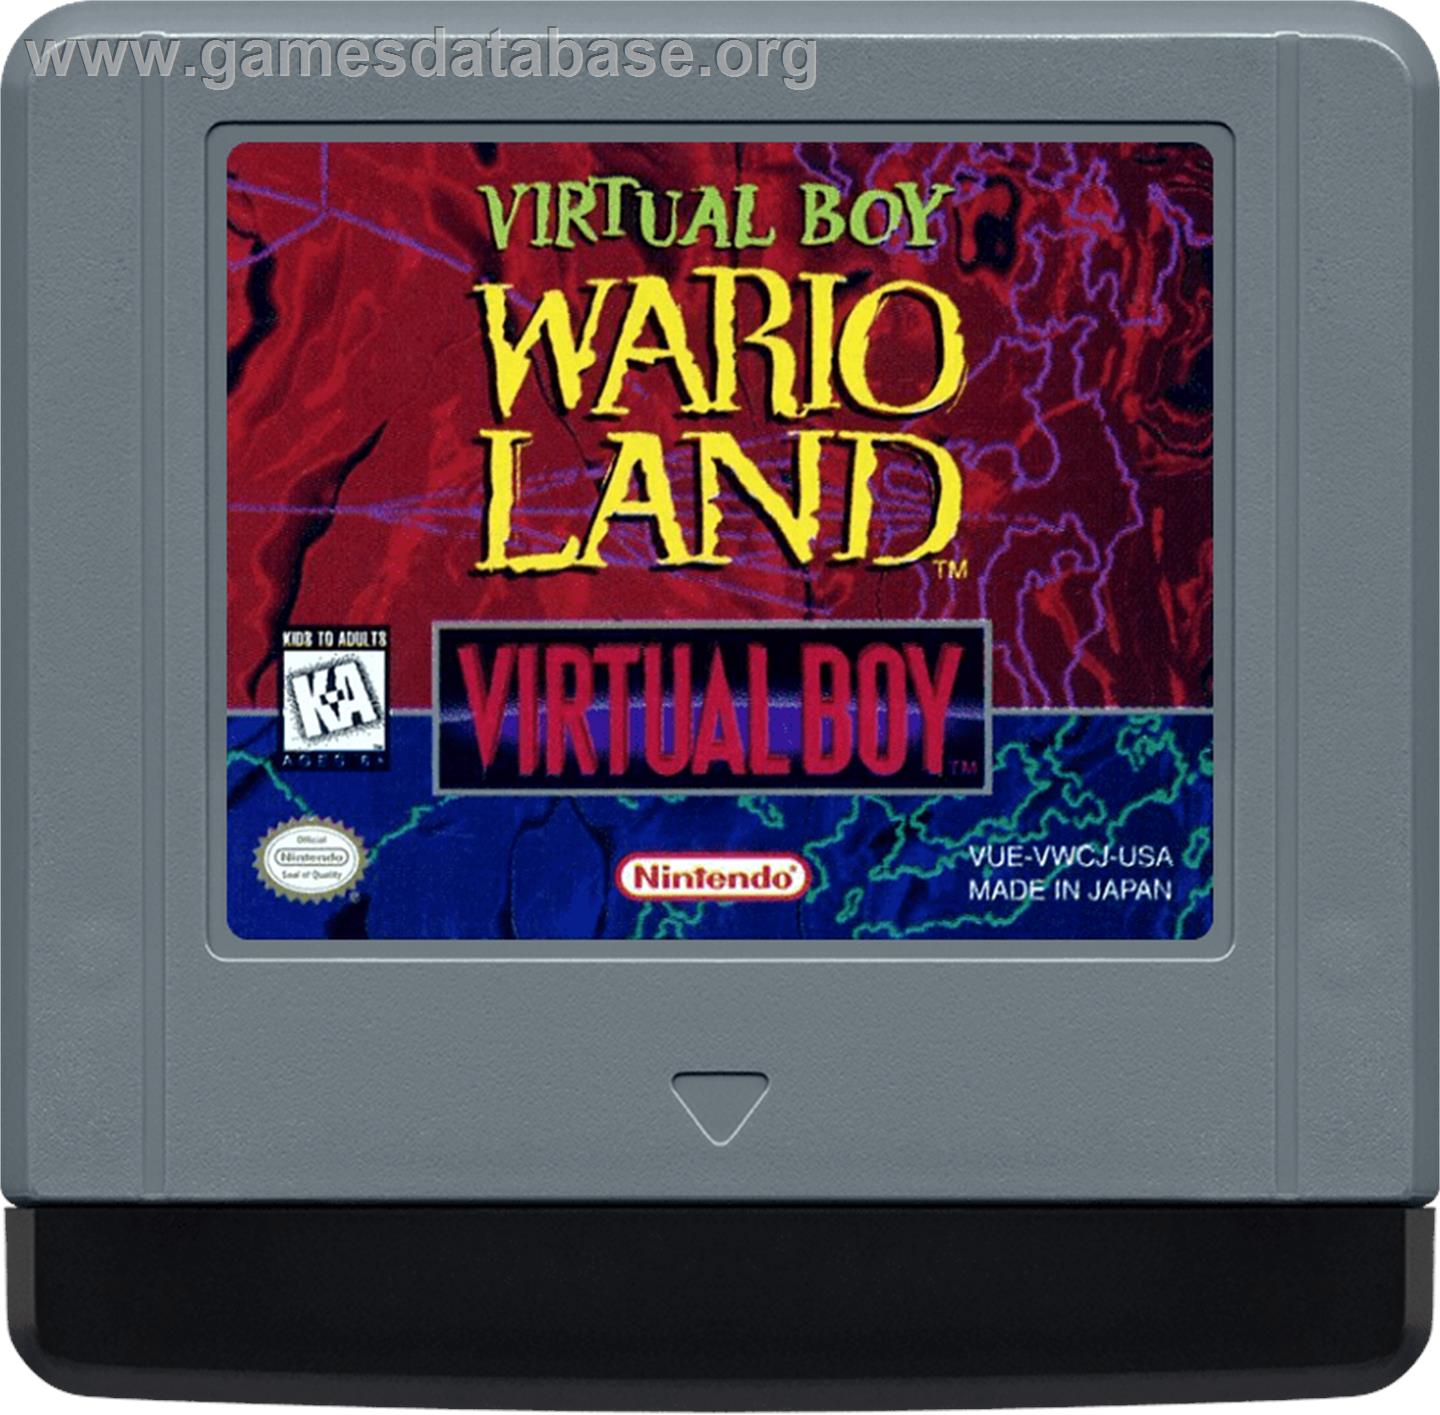 Virtual Boy Wario Land - Nintendo Virtual Boy - Artwork - Cartridge